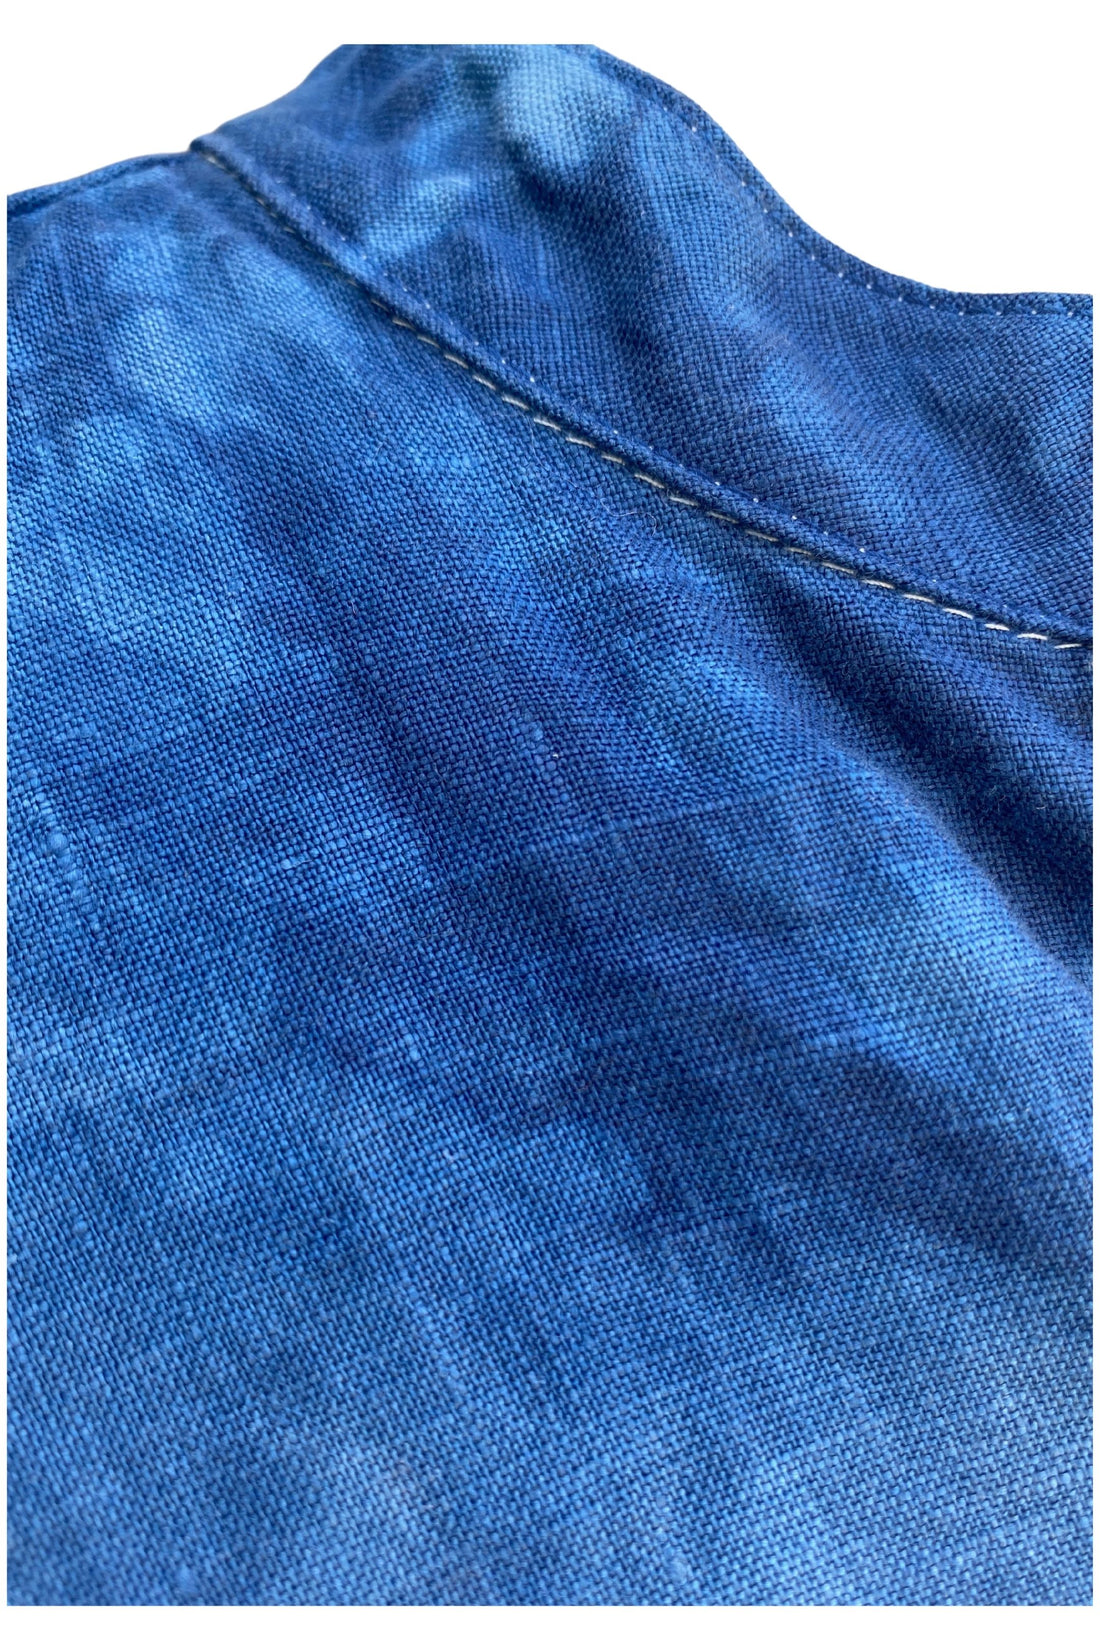 Dark Blue Linen Celeste Dress with Pockets